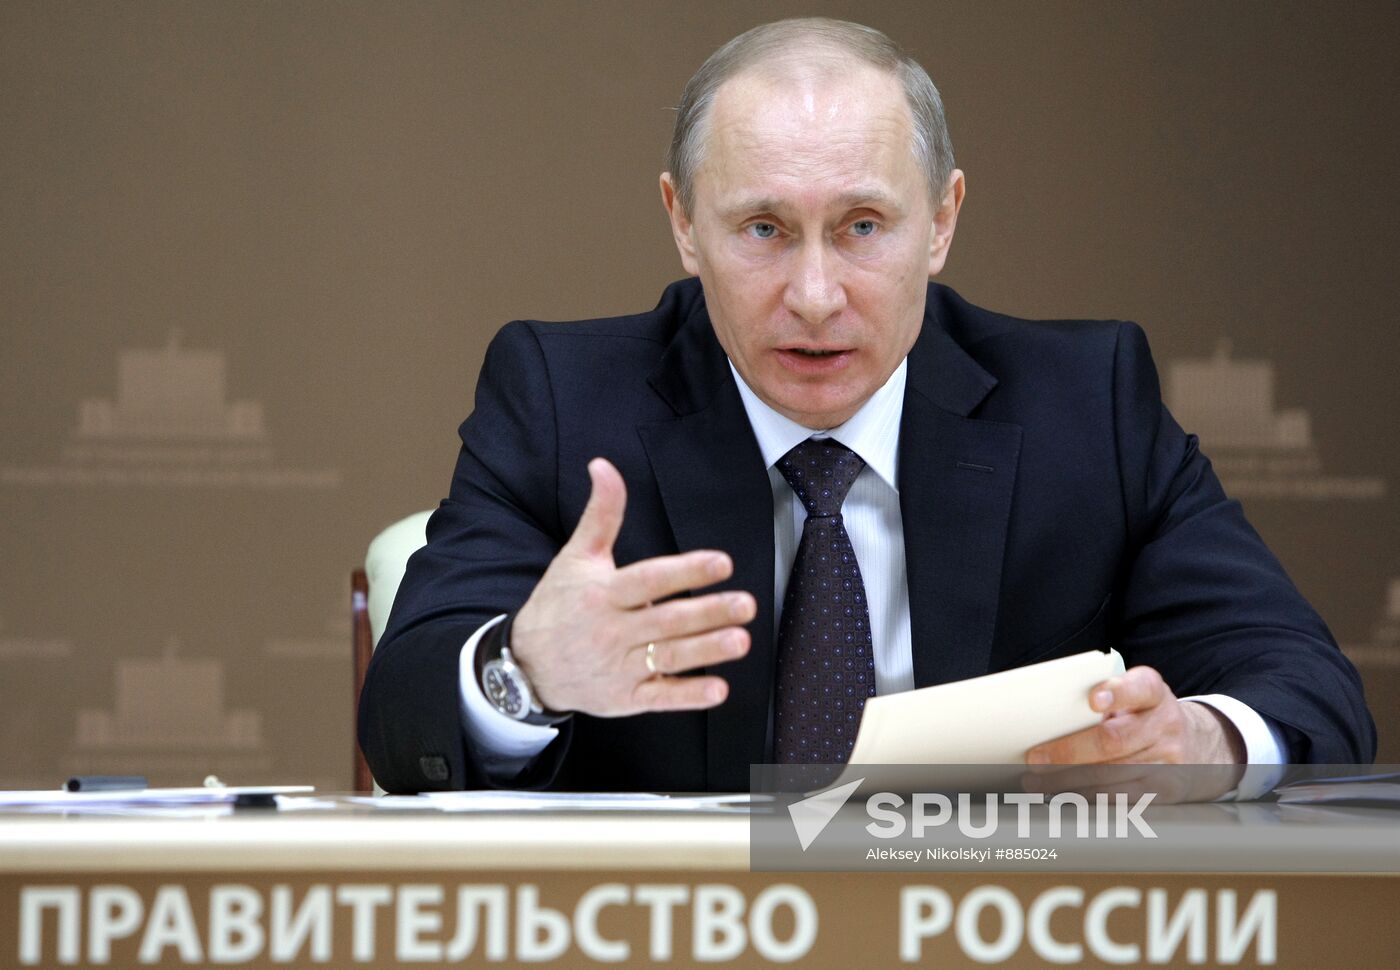 Vladimir Putin chairs video conference